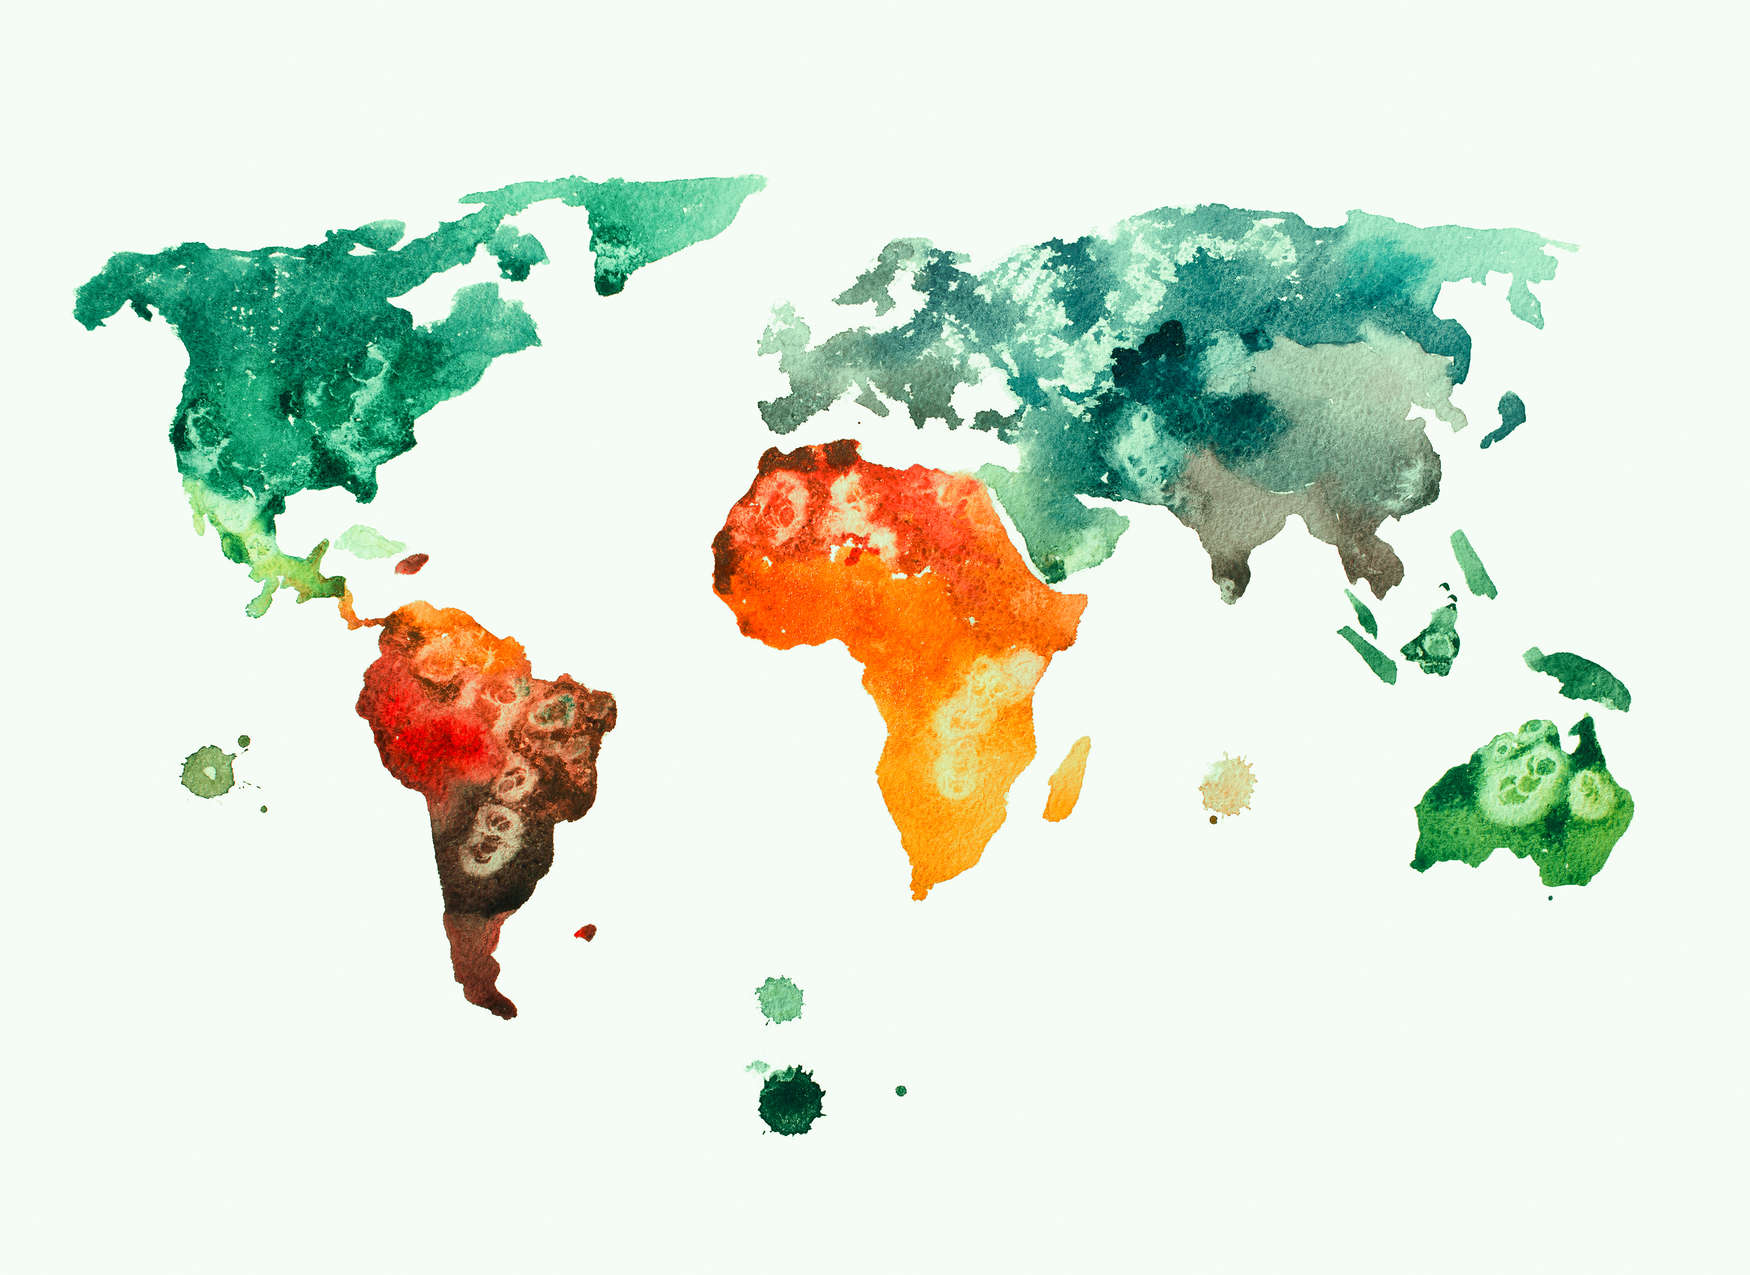             World Map Wallpaper Watercolours - Colourful, White, Green
        